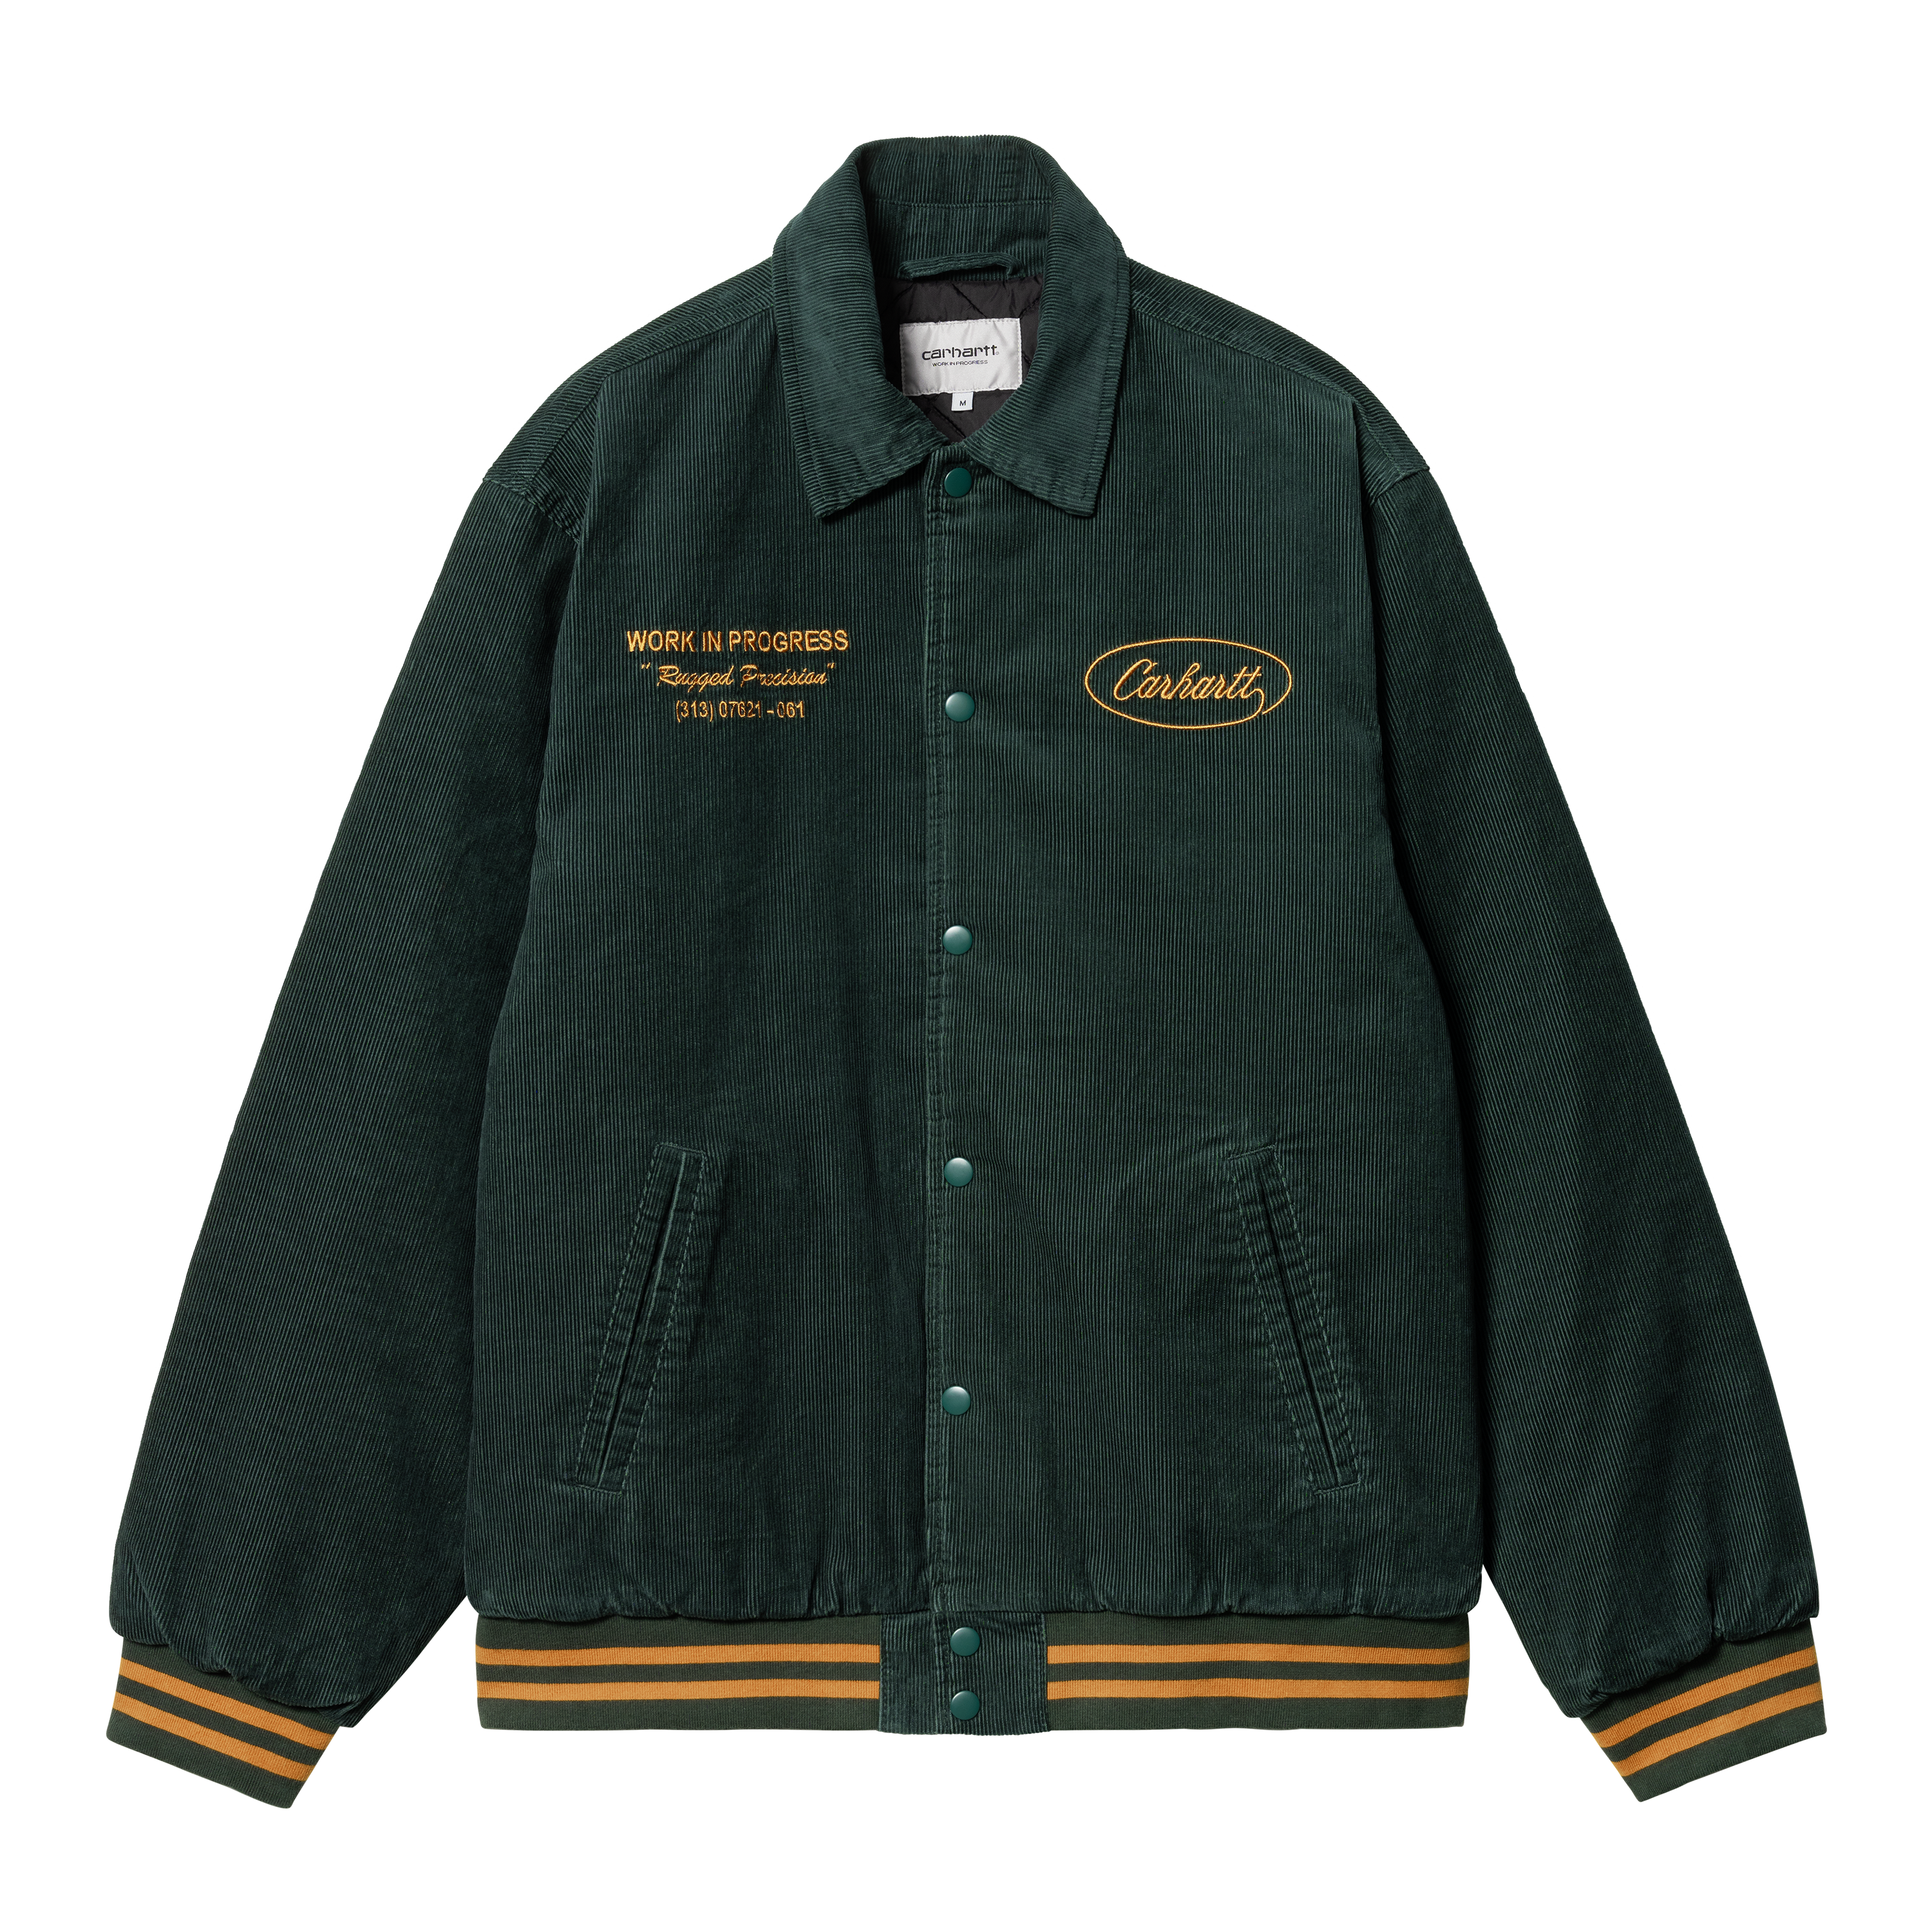 Carhartt WIP Rugged Letterman Jacket in Green